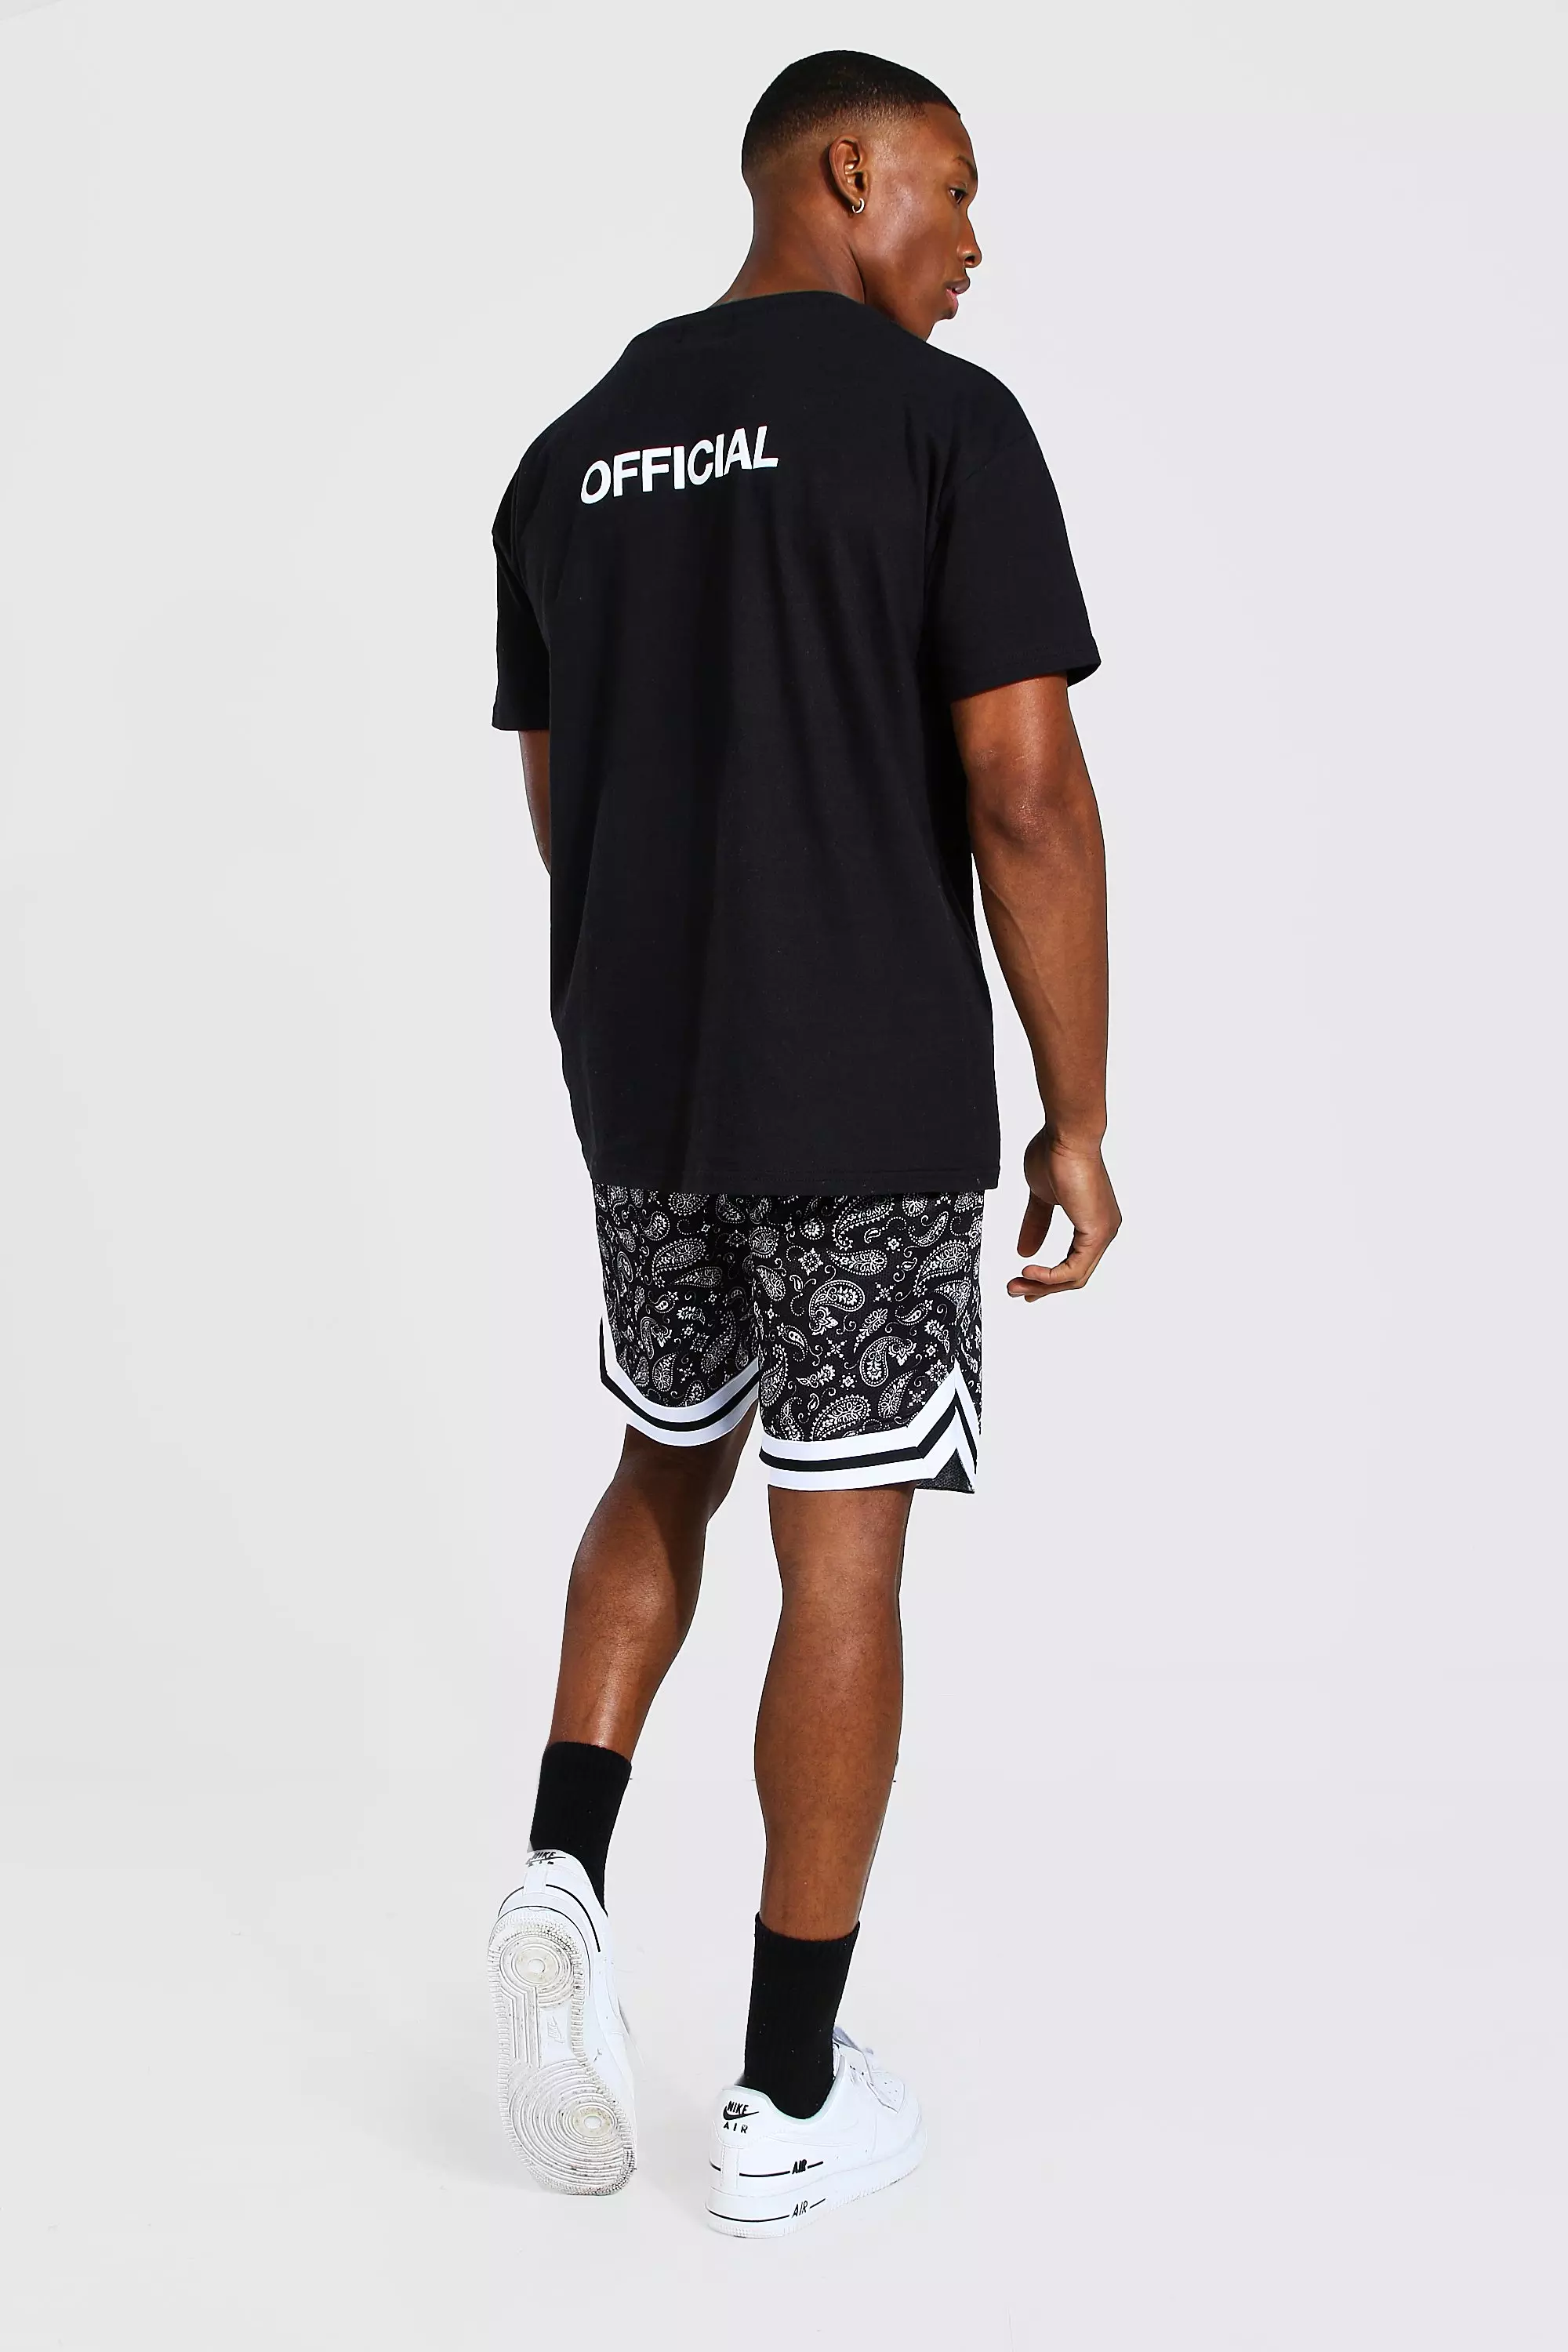 MM MASMIG Black Sun Printed Basketball Shorts with Zipper Pockets